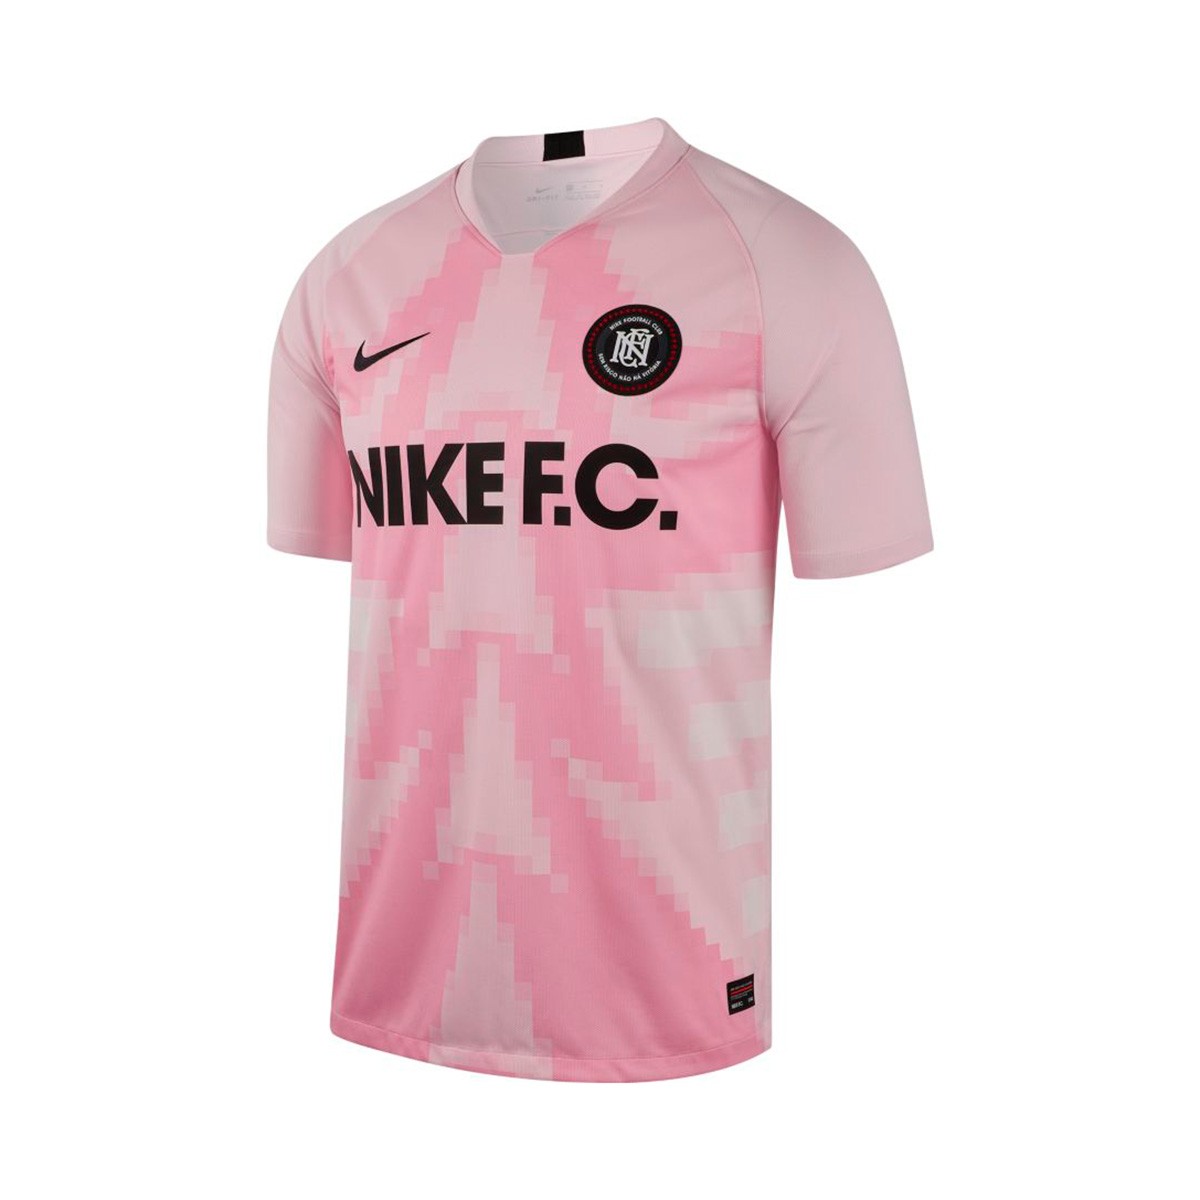 Camiseta Nike Nike F.C. Pink foam-Pink rise-Black - Tienda de fútbol Fútbol  Emotion